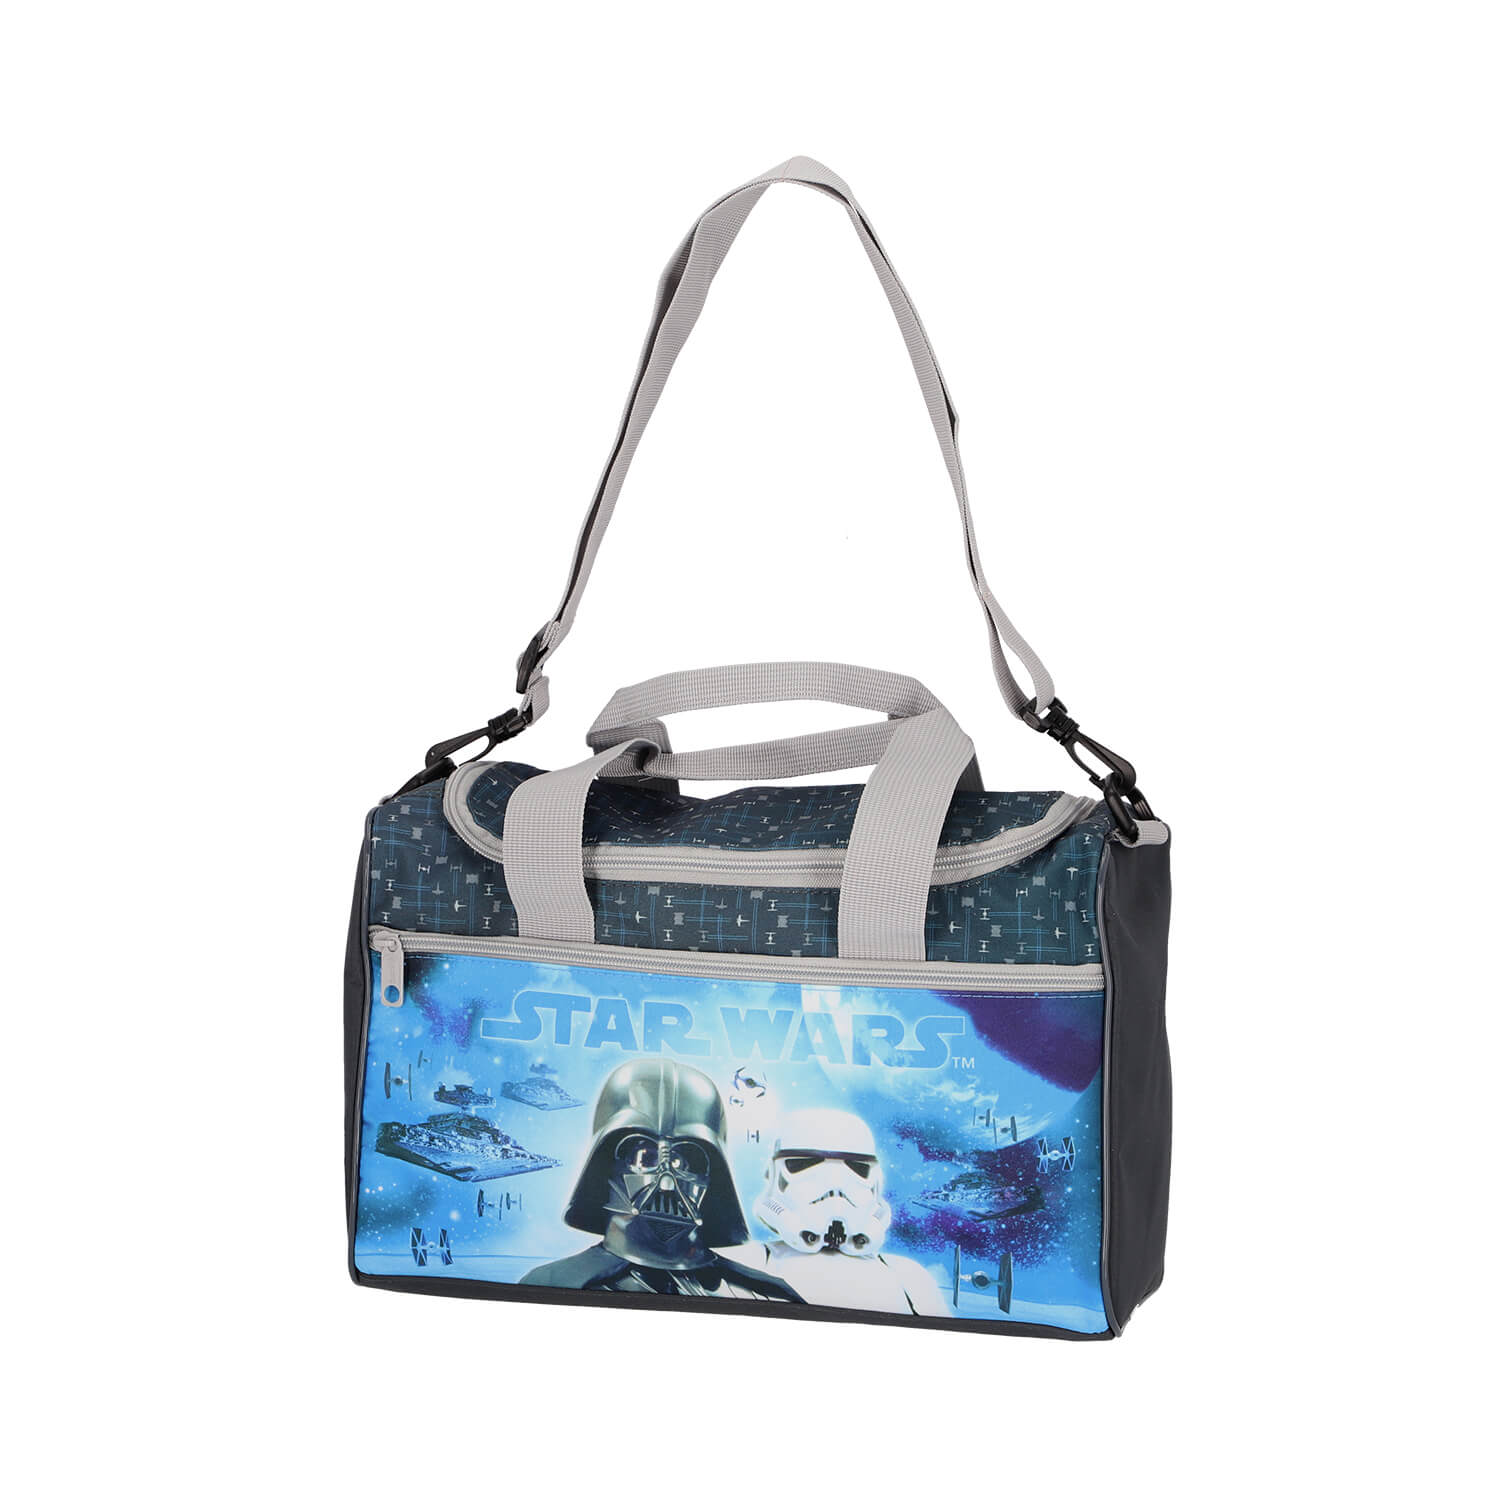 Scooli Sporttasche mit Star Wars Motiv in blau/grau